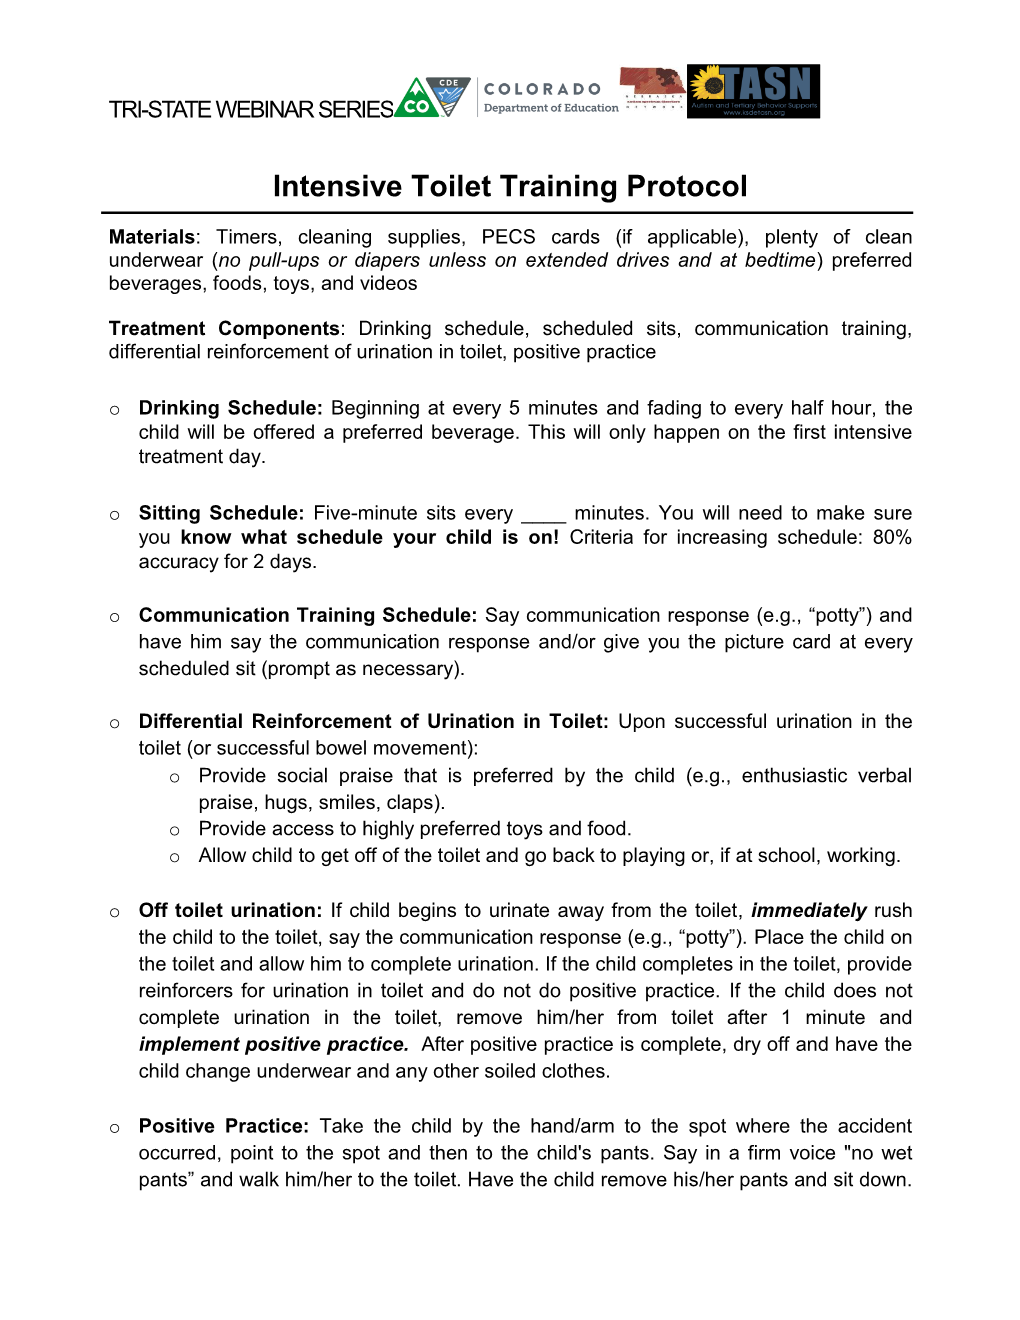 Toilet Training Protocol